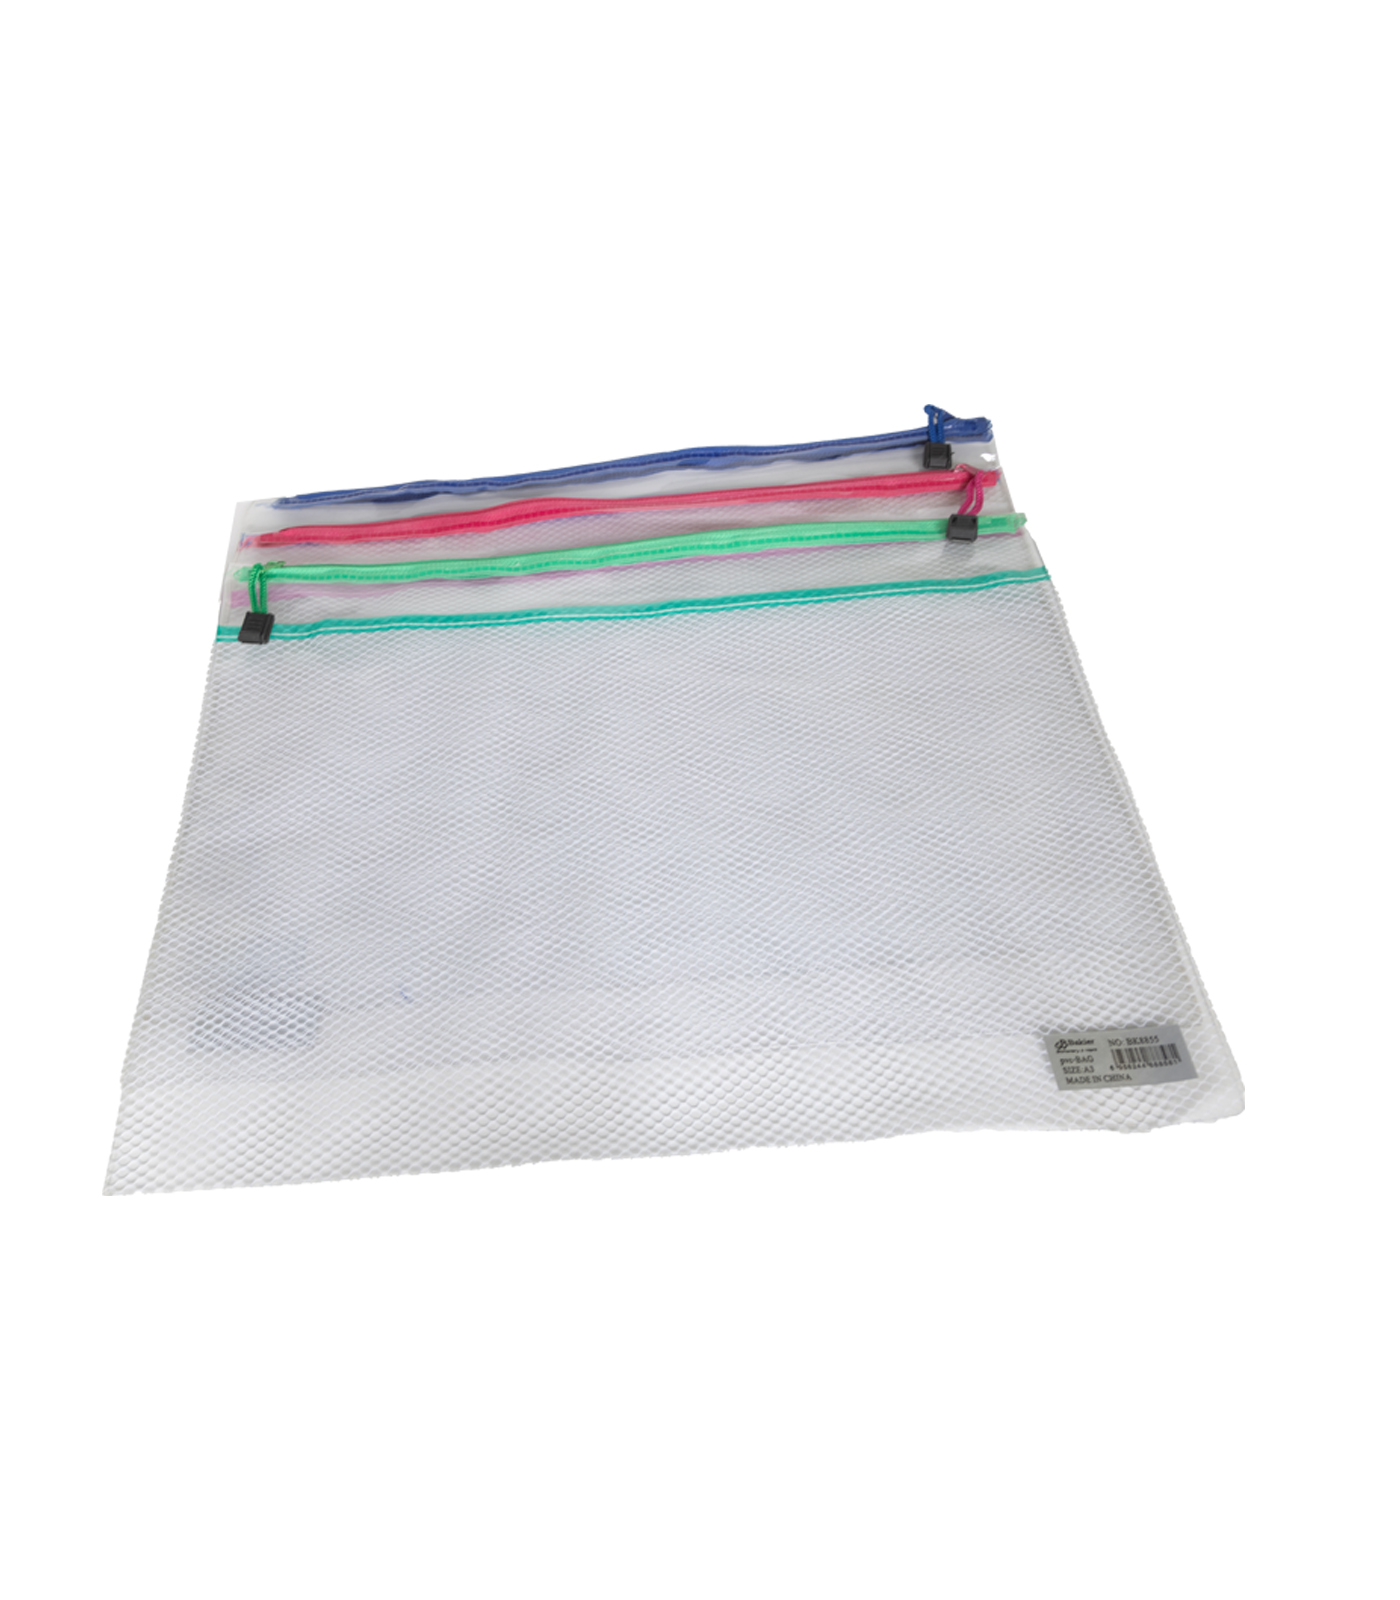 Folder with colorful zipper - Transparent - A3